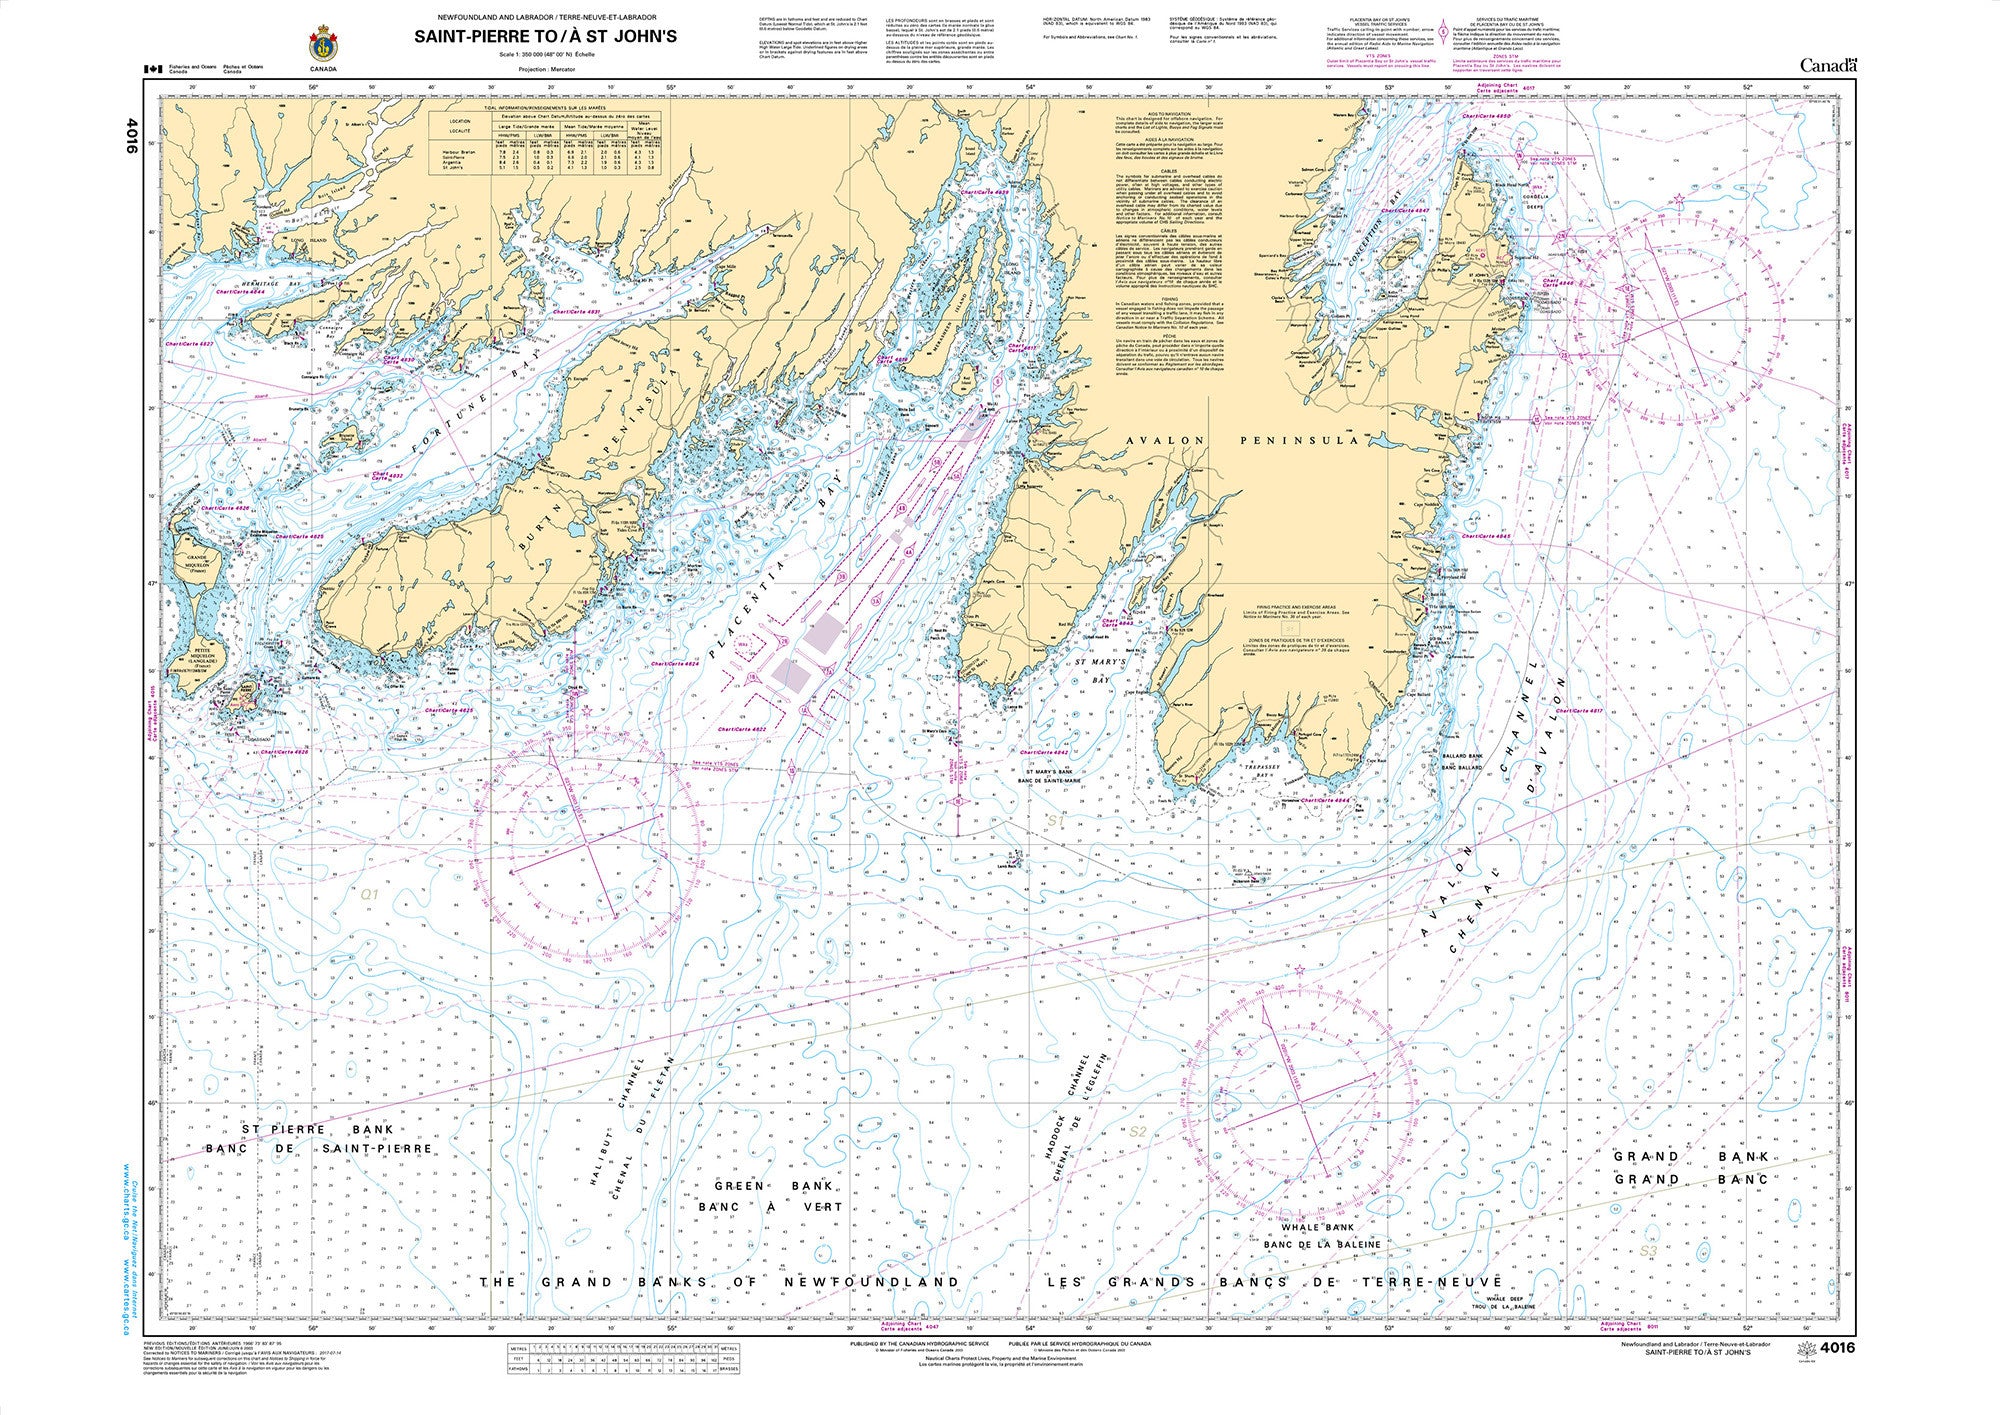 Canadian Hydrographic Service Nautical Chart CHS4016: Saint-Pierre to/à St. John's